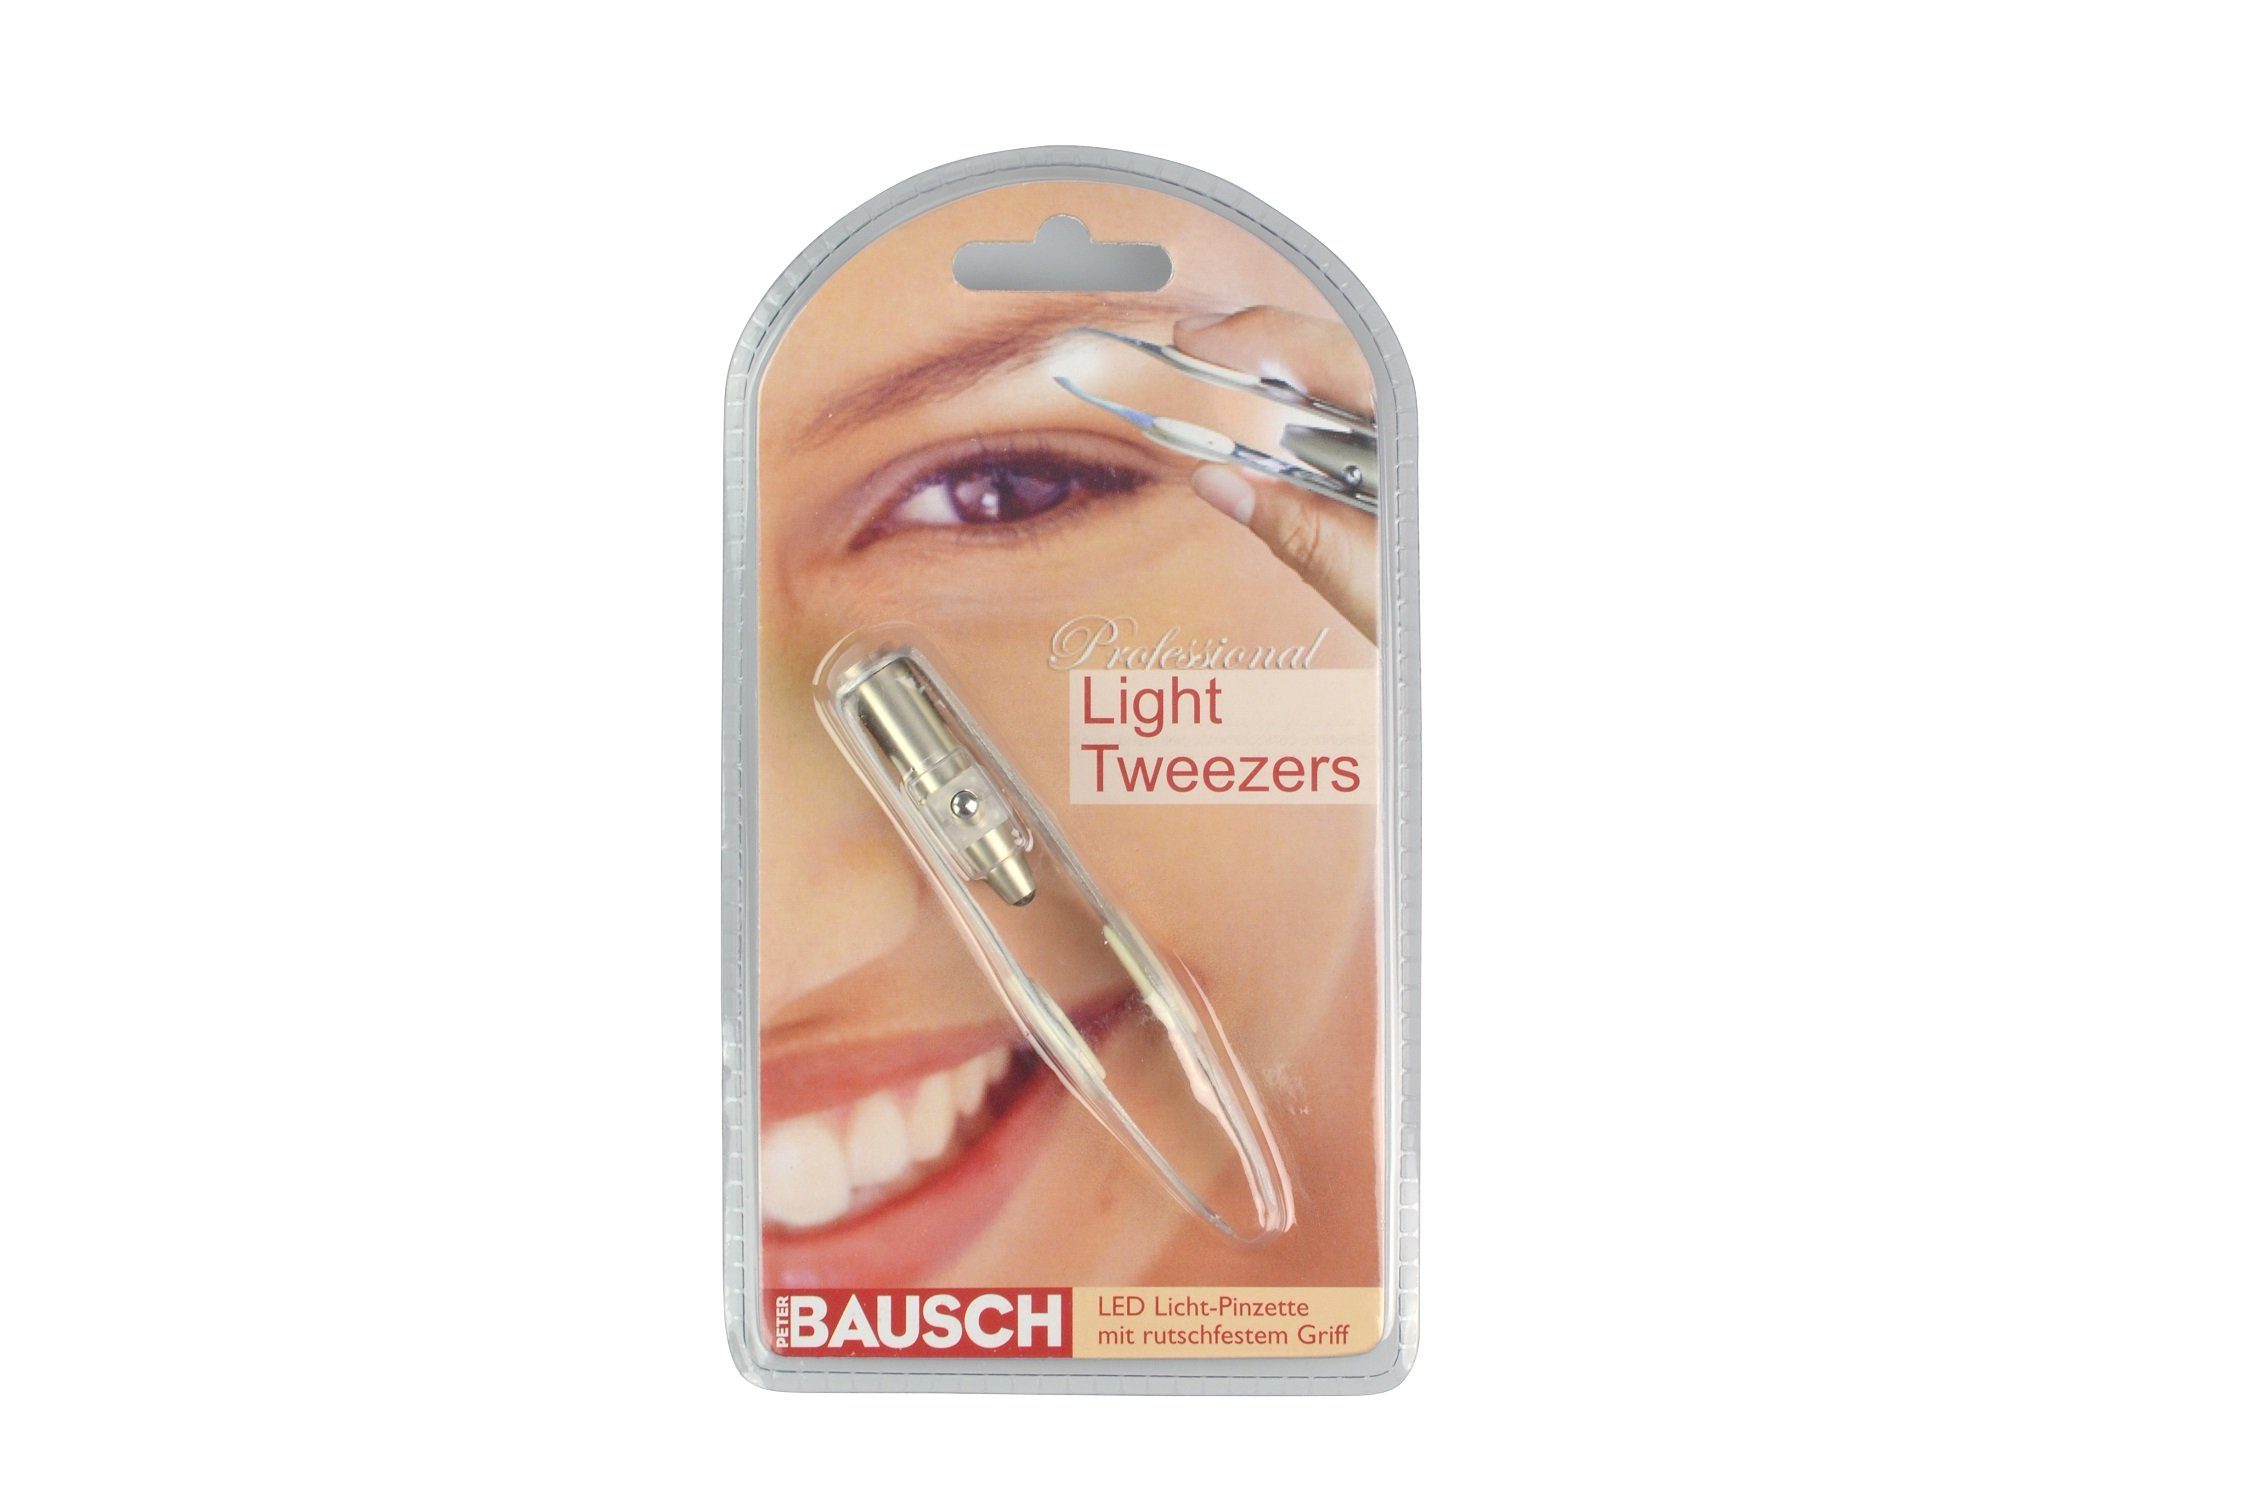 PZ52B BAUSCH PETER Griff, mit Licht-Pinzette Augenbrauenpinzette LED rutschfestem